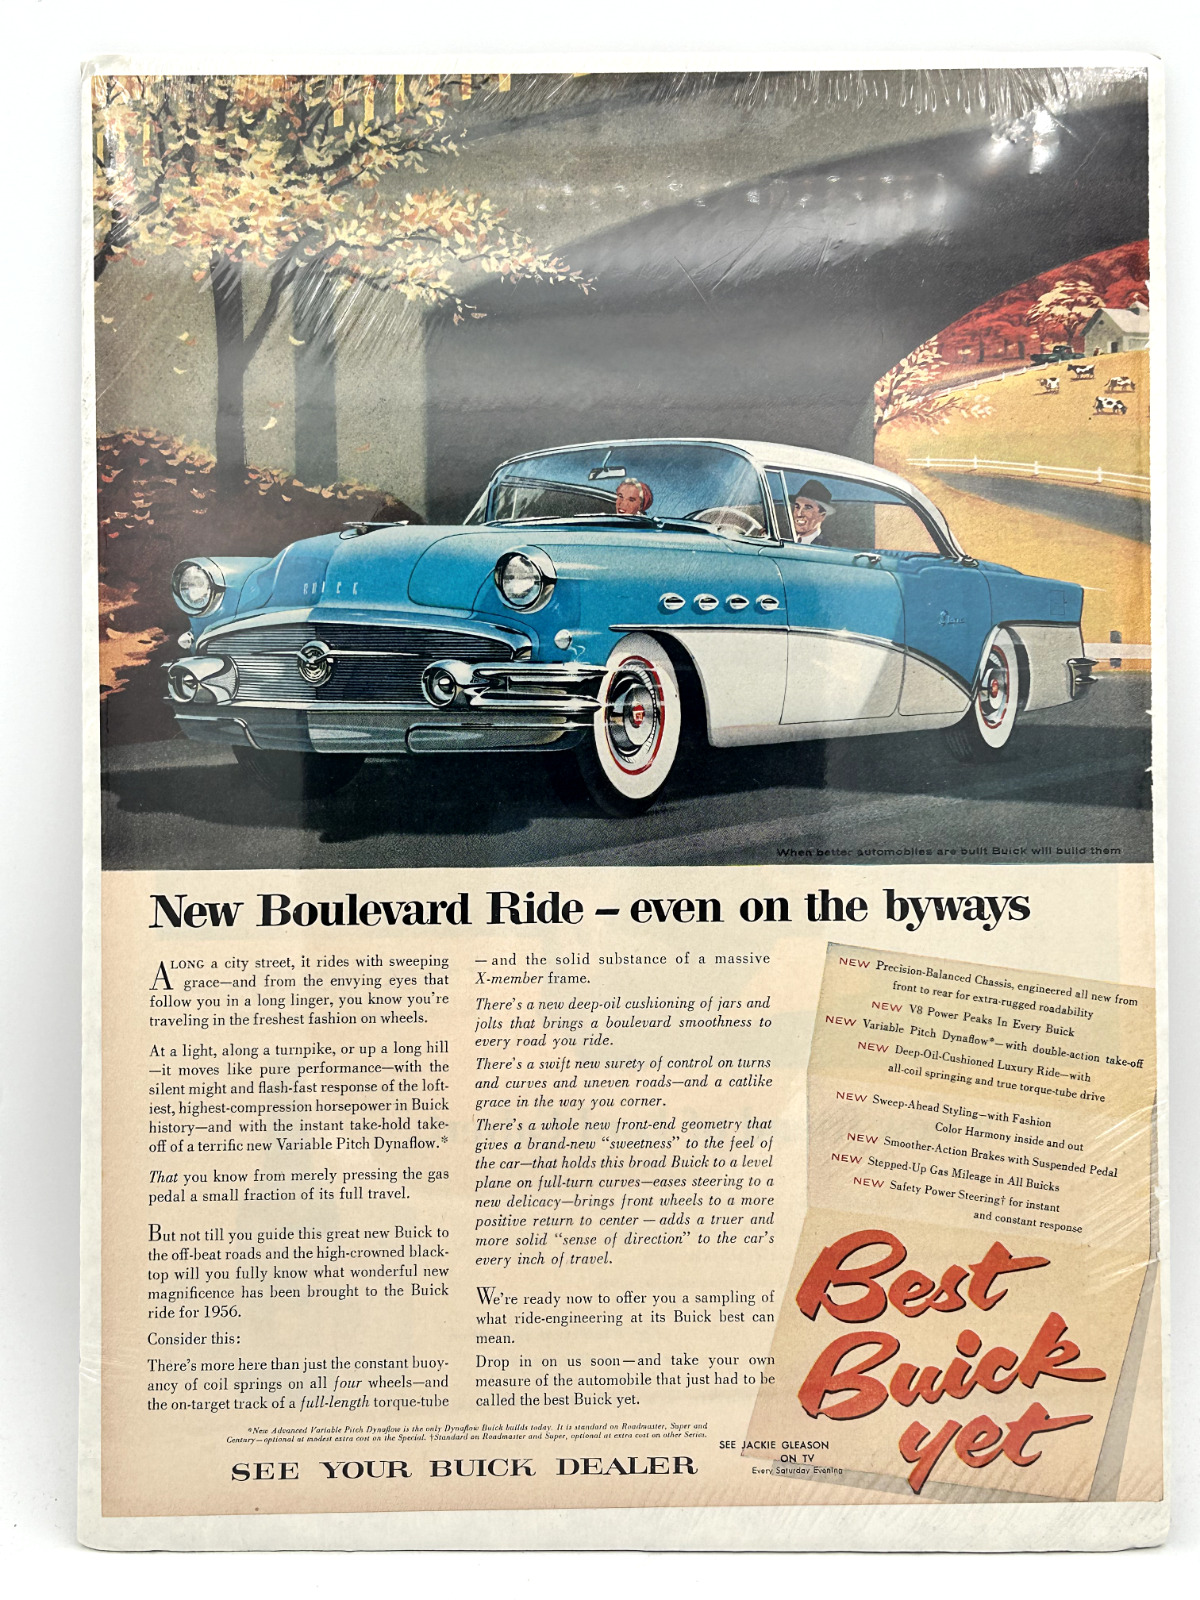 1956 BUICK Boulevard Ride Blue White Car General Motors Cars Vintage Print Ad